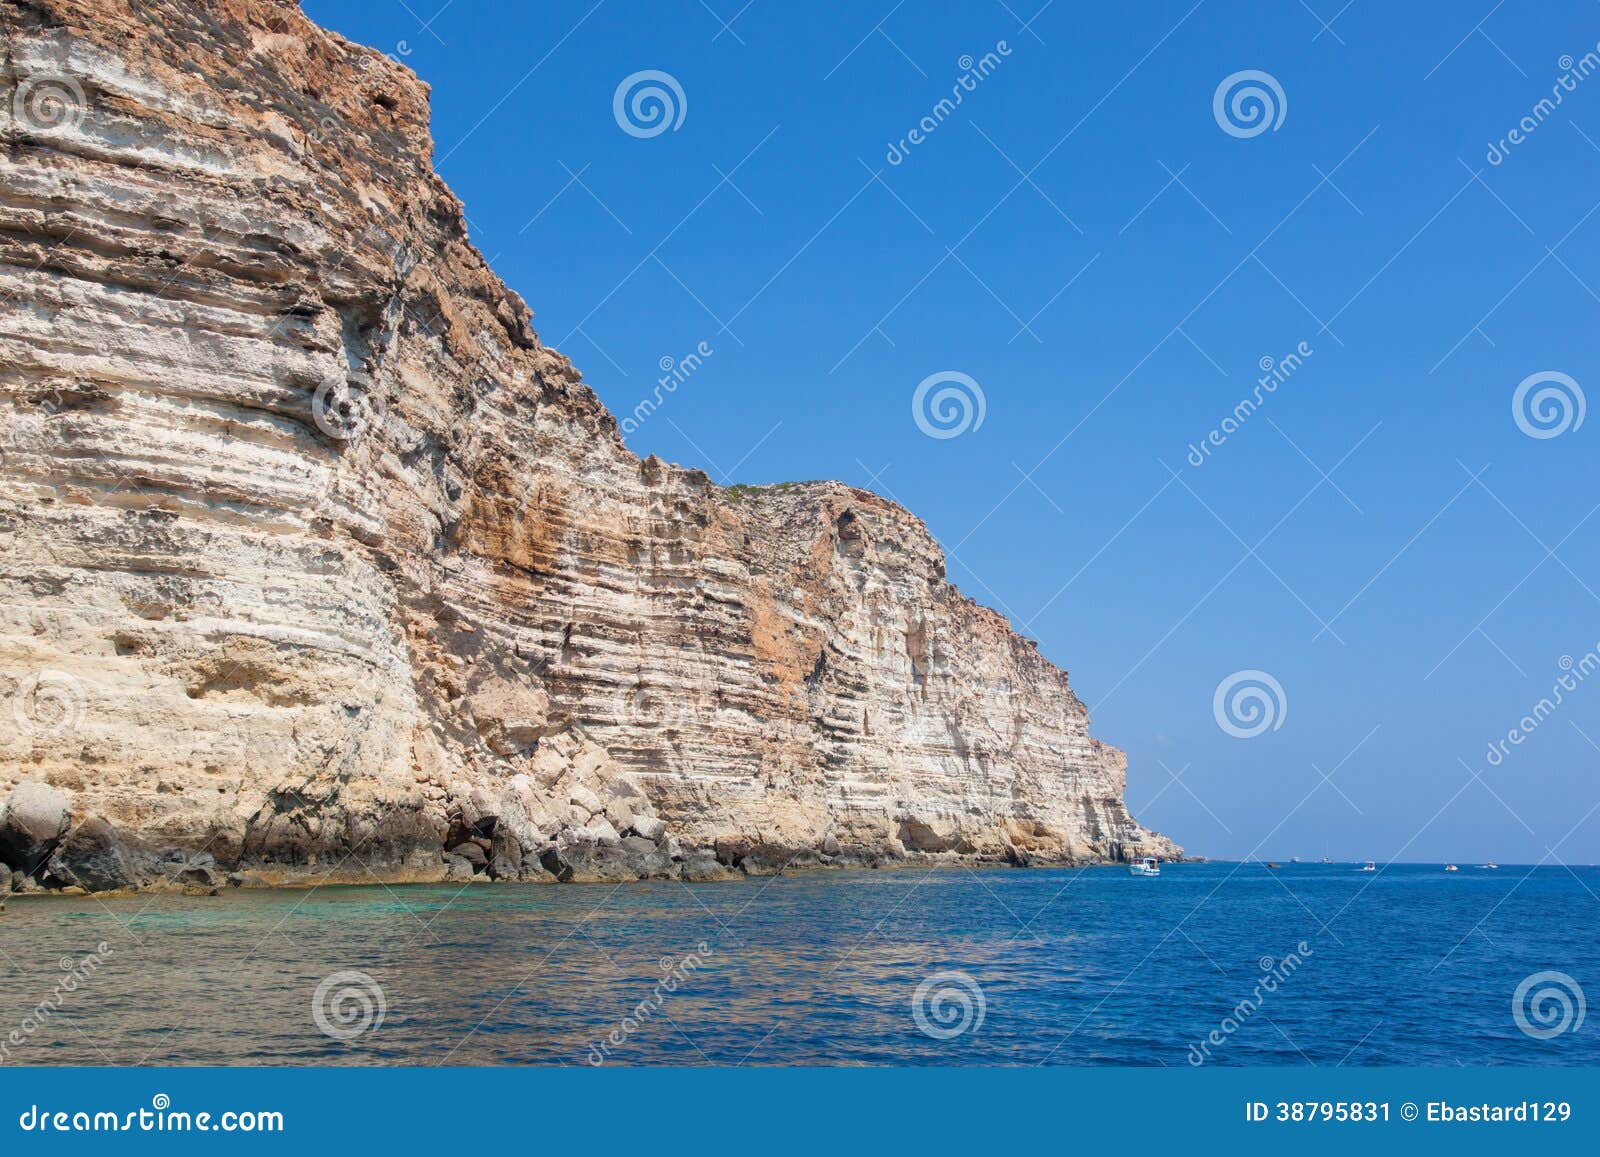 rocks in lampedusa island sicily